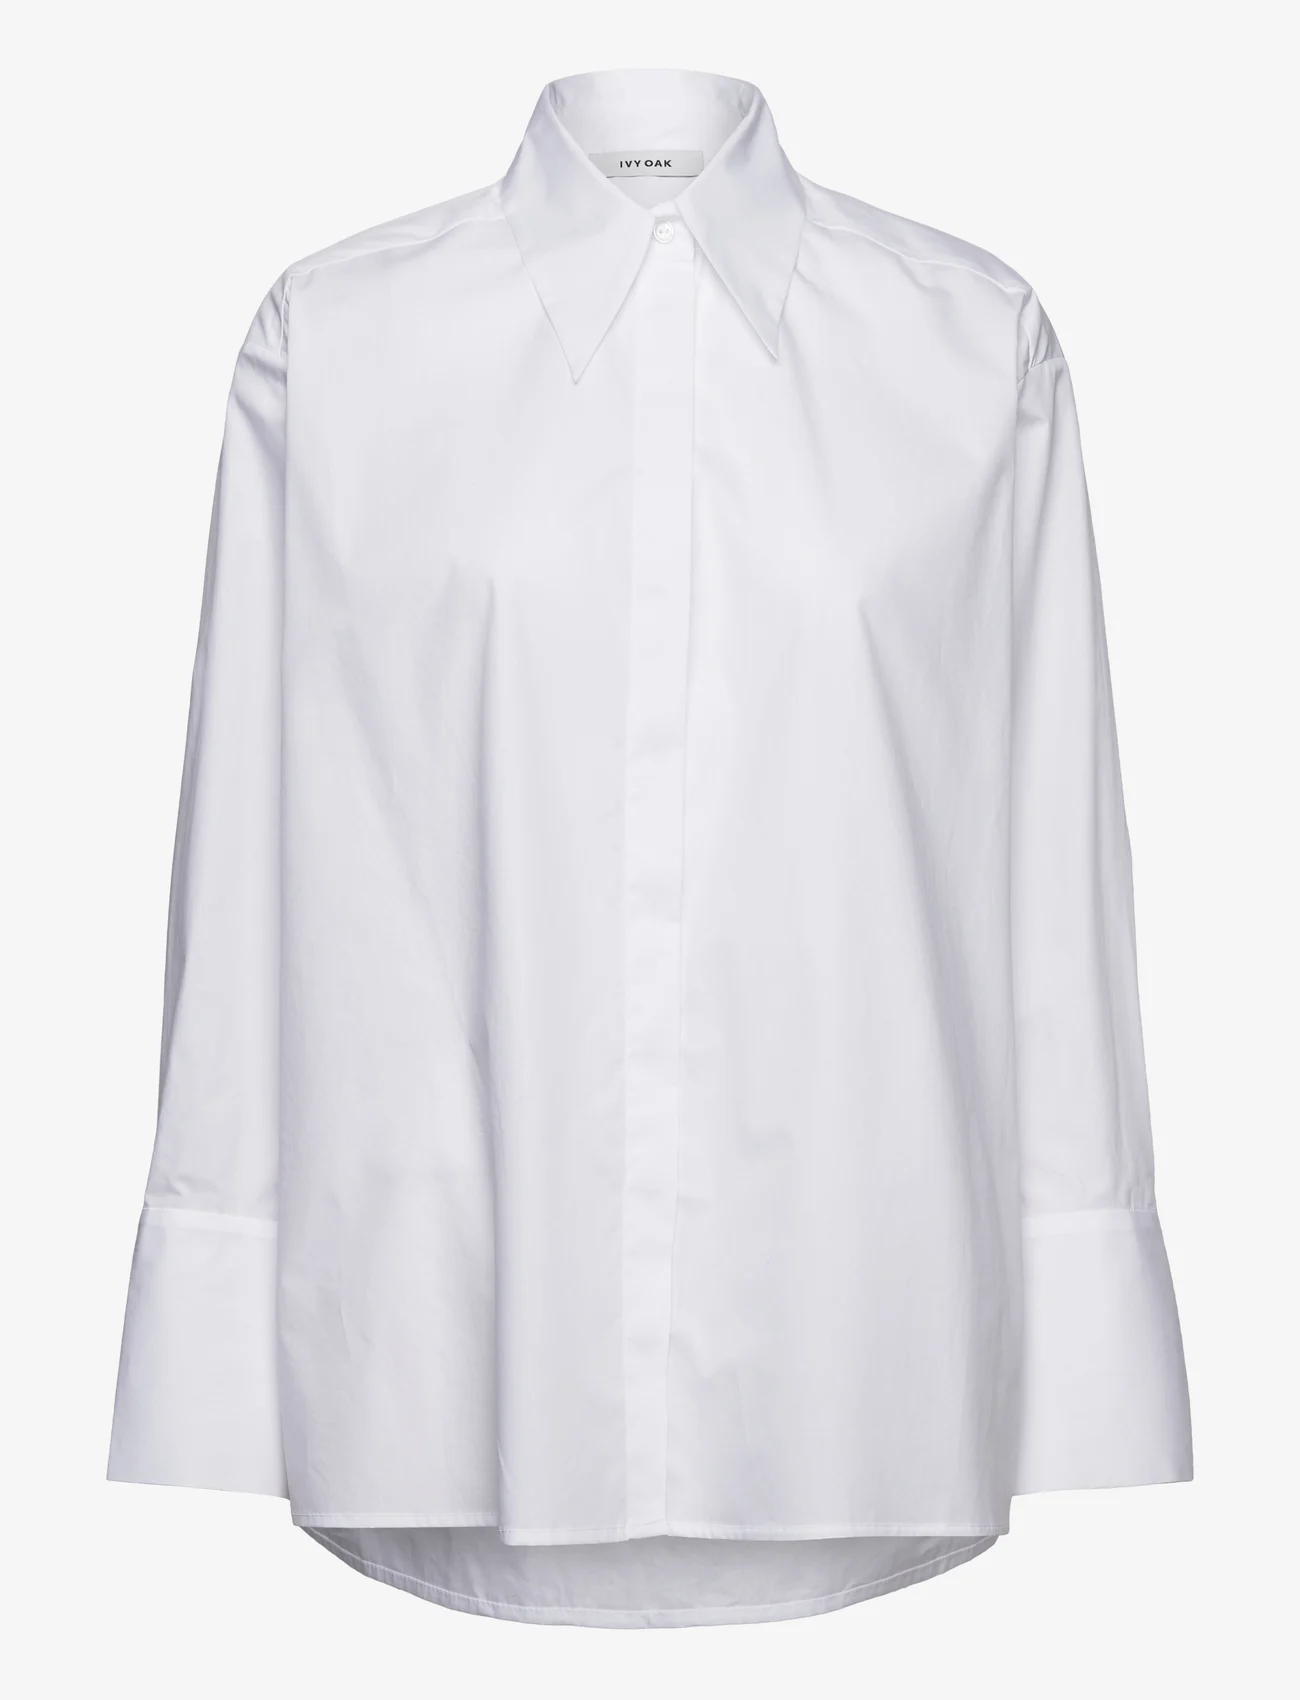 IVY OAK - Big collar blouse - langärmlige hemden - bright white - 0